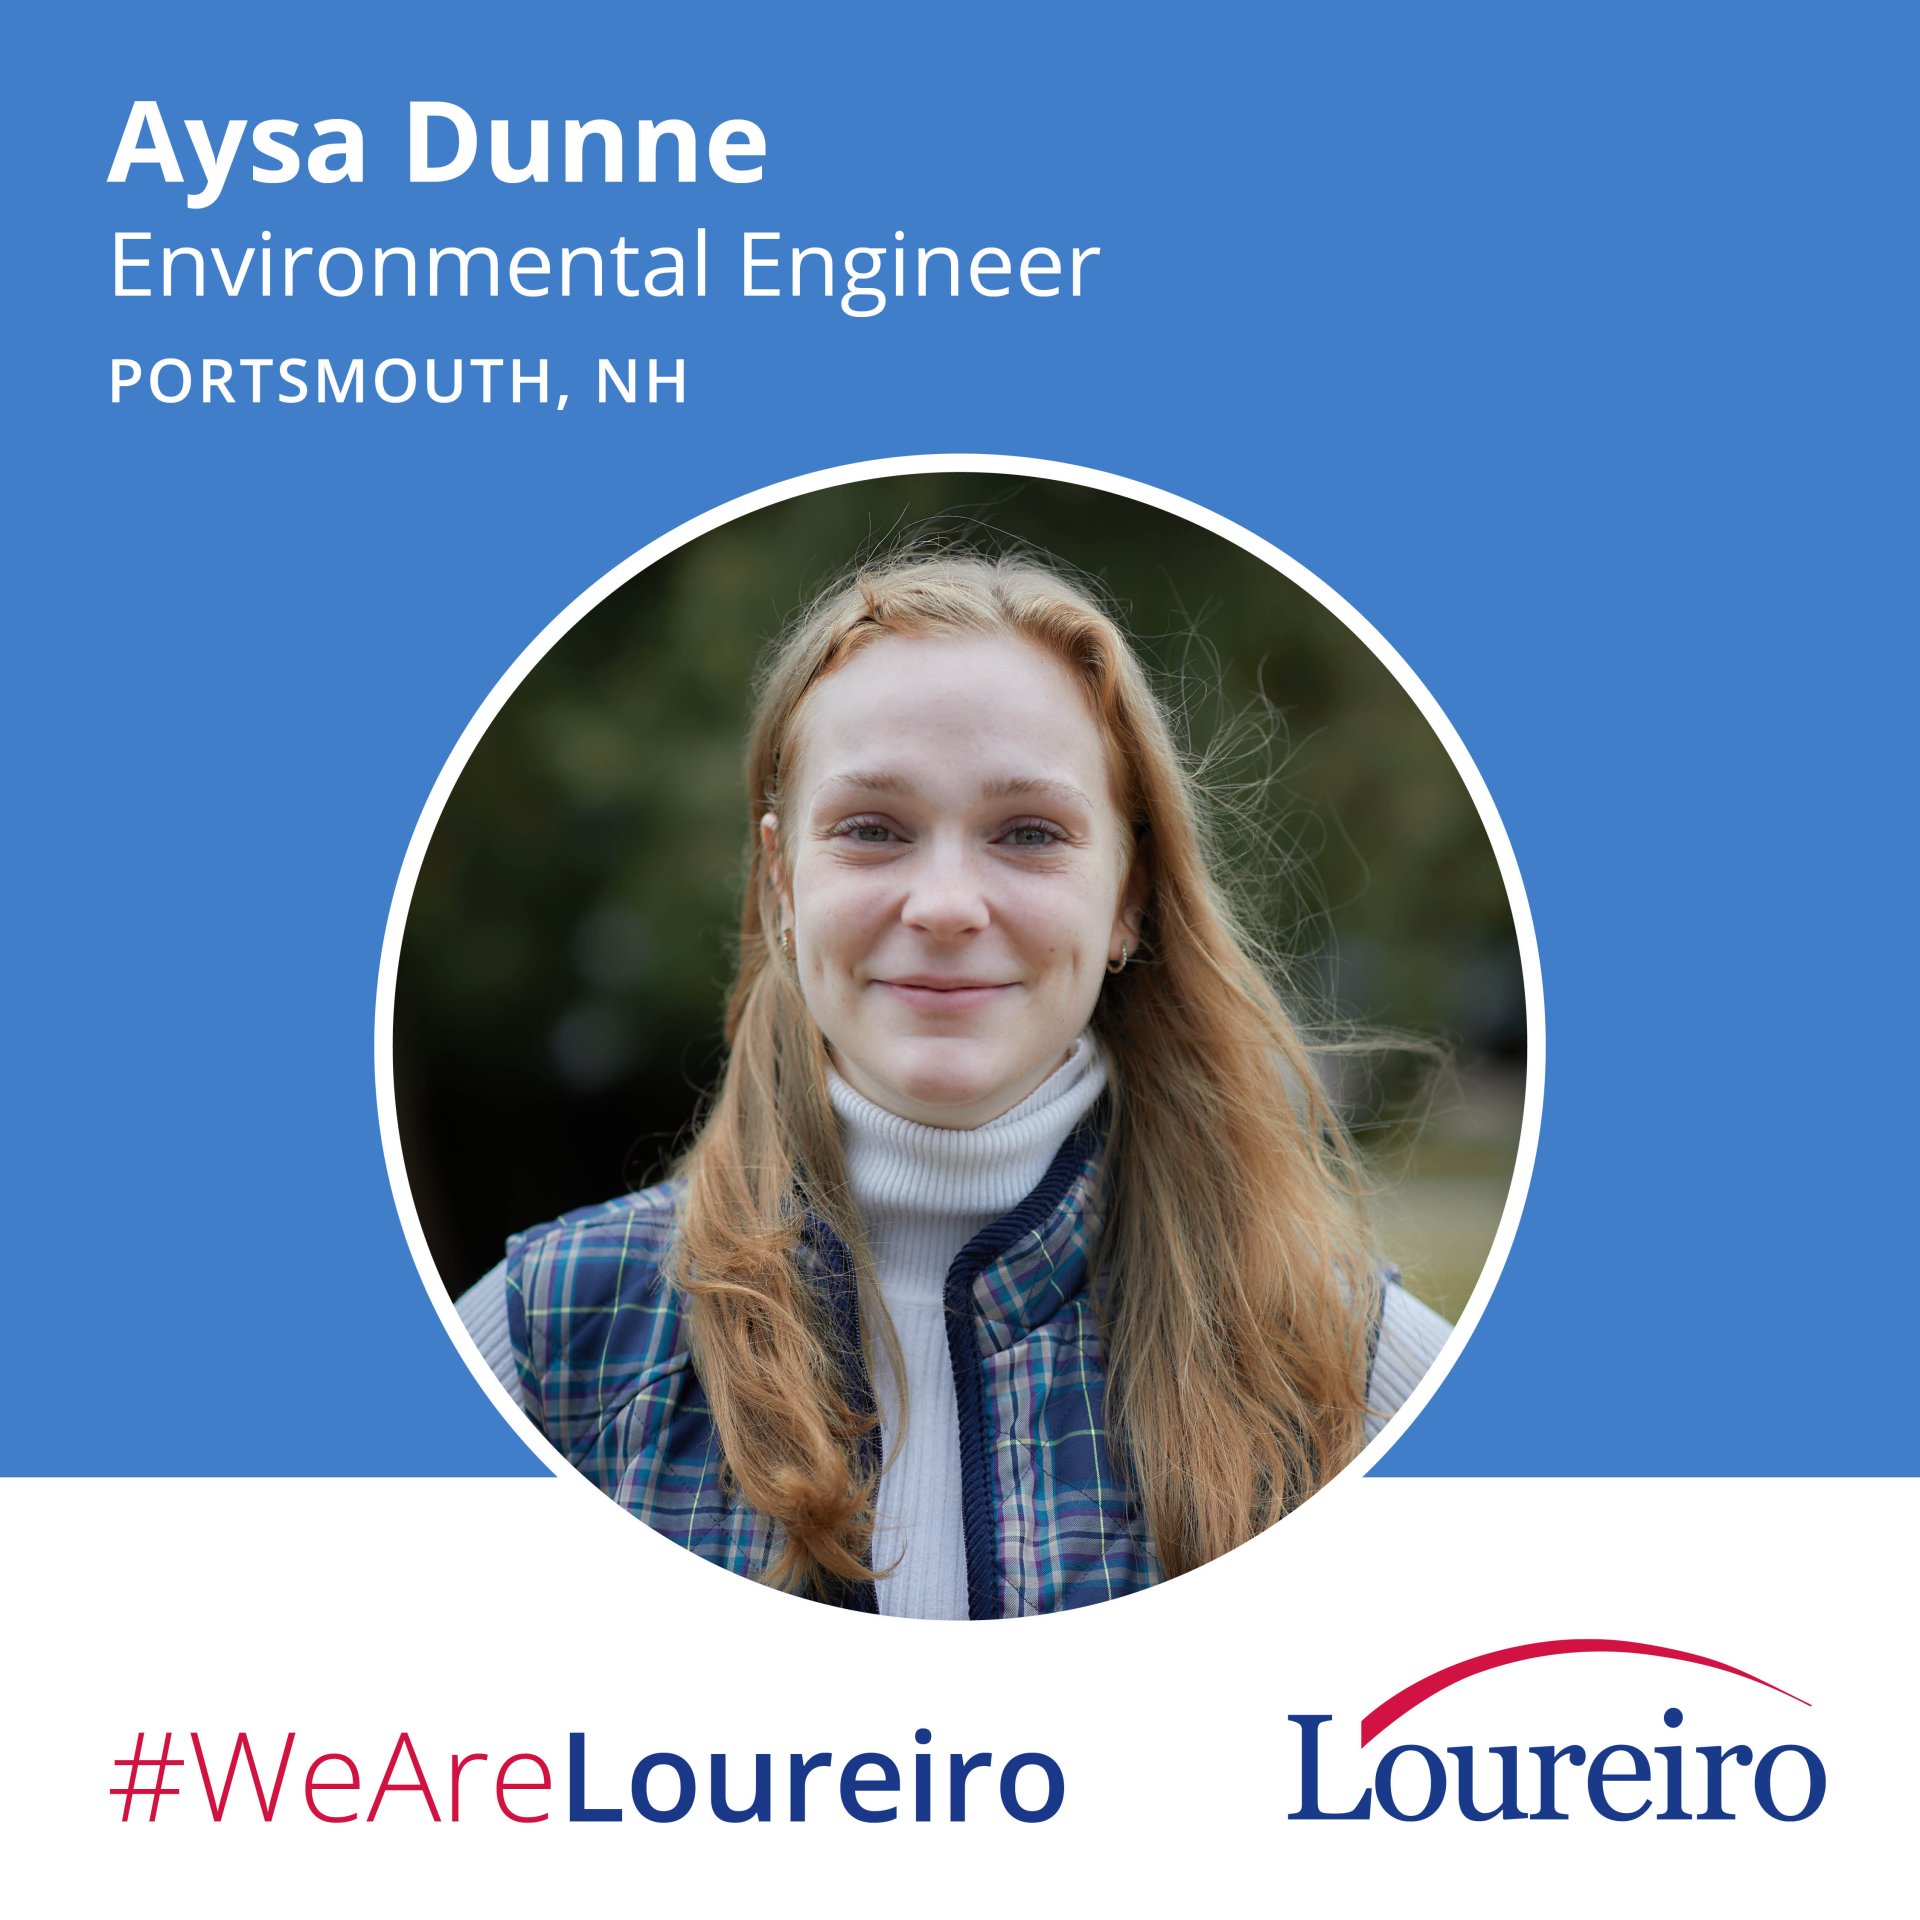 We Are Loureiro: Aysa Dunne